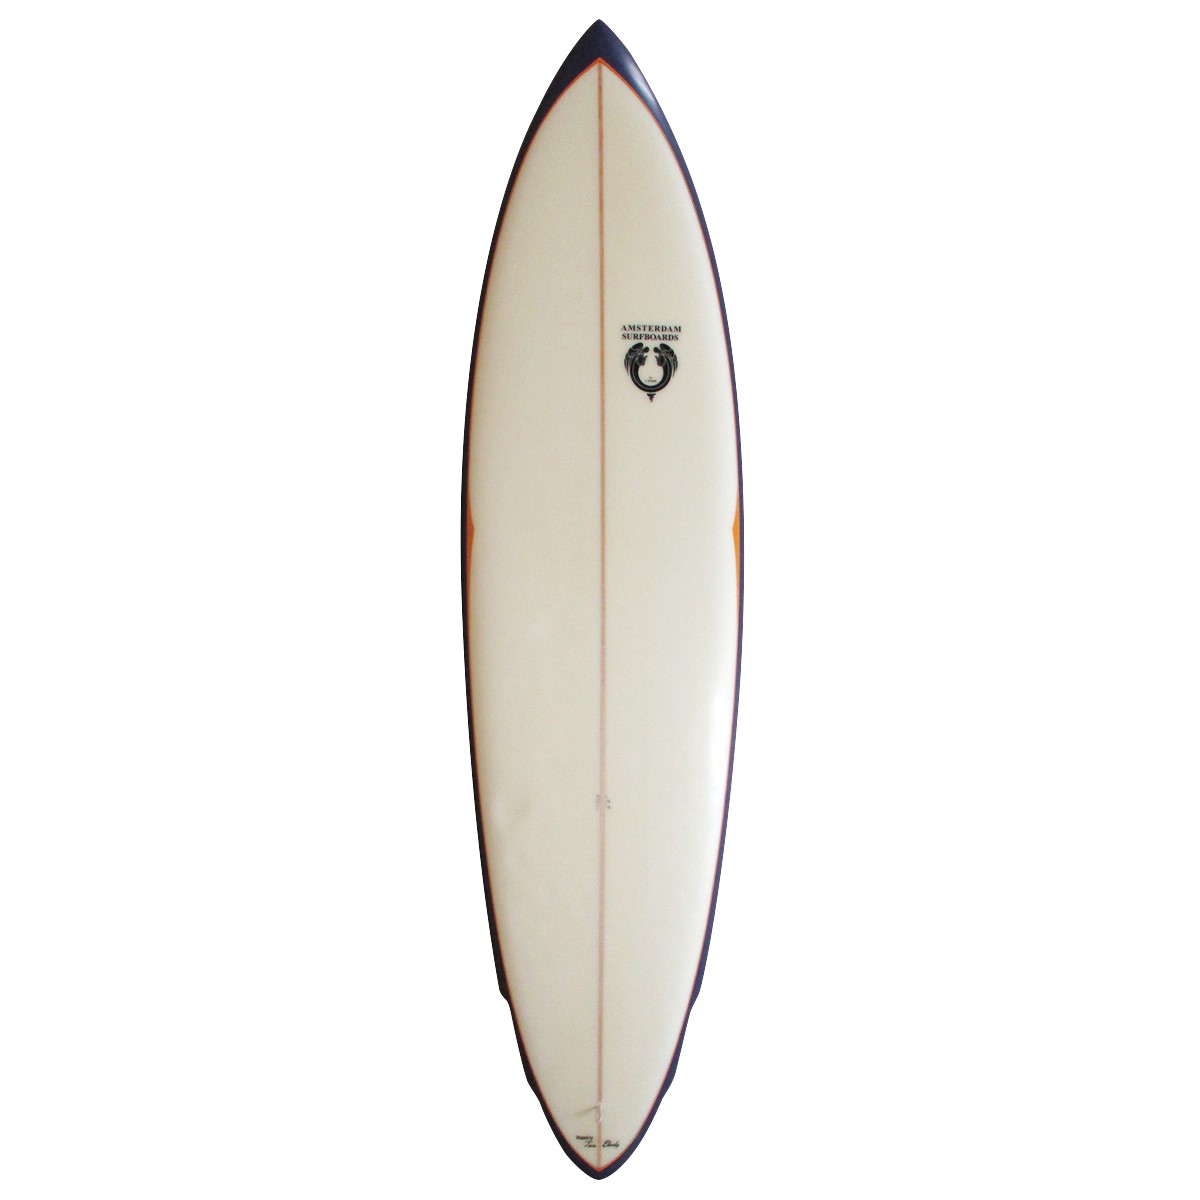 SURFBOARDS BY JOEL TUDOR / SINGLE PIN 6'6